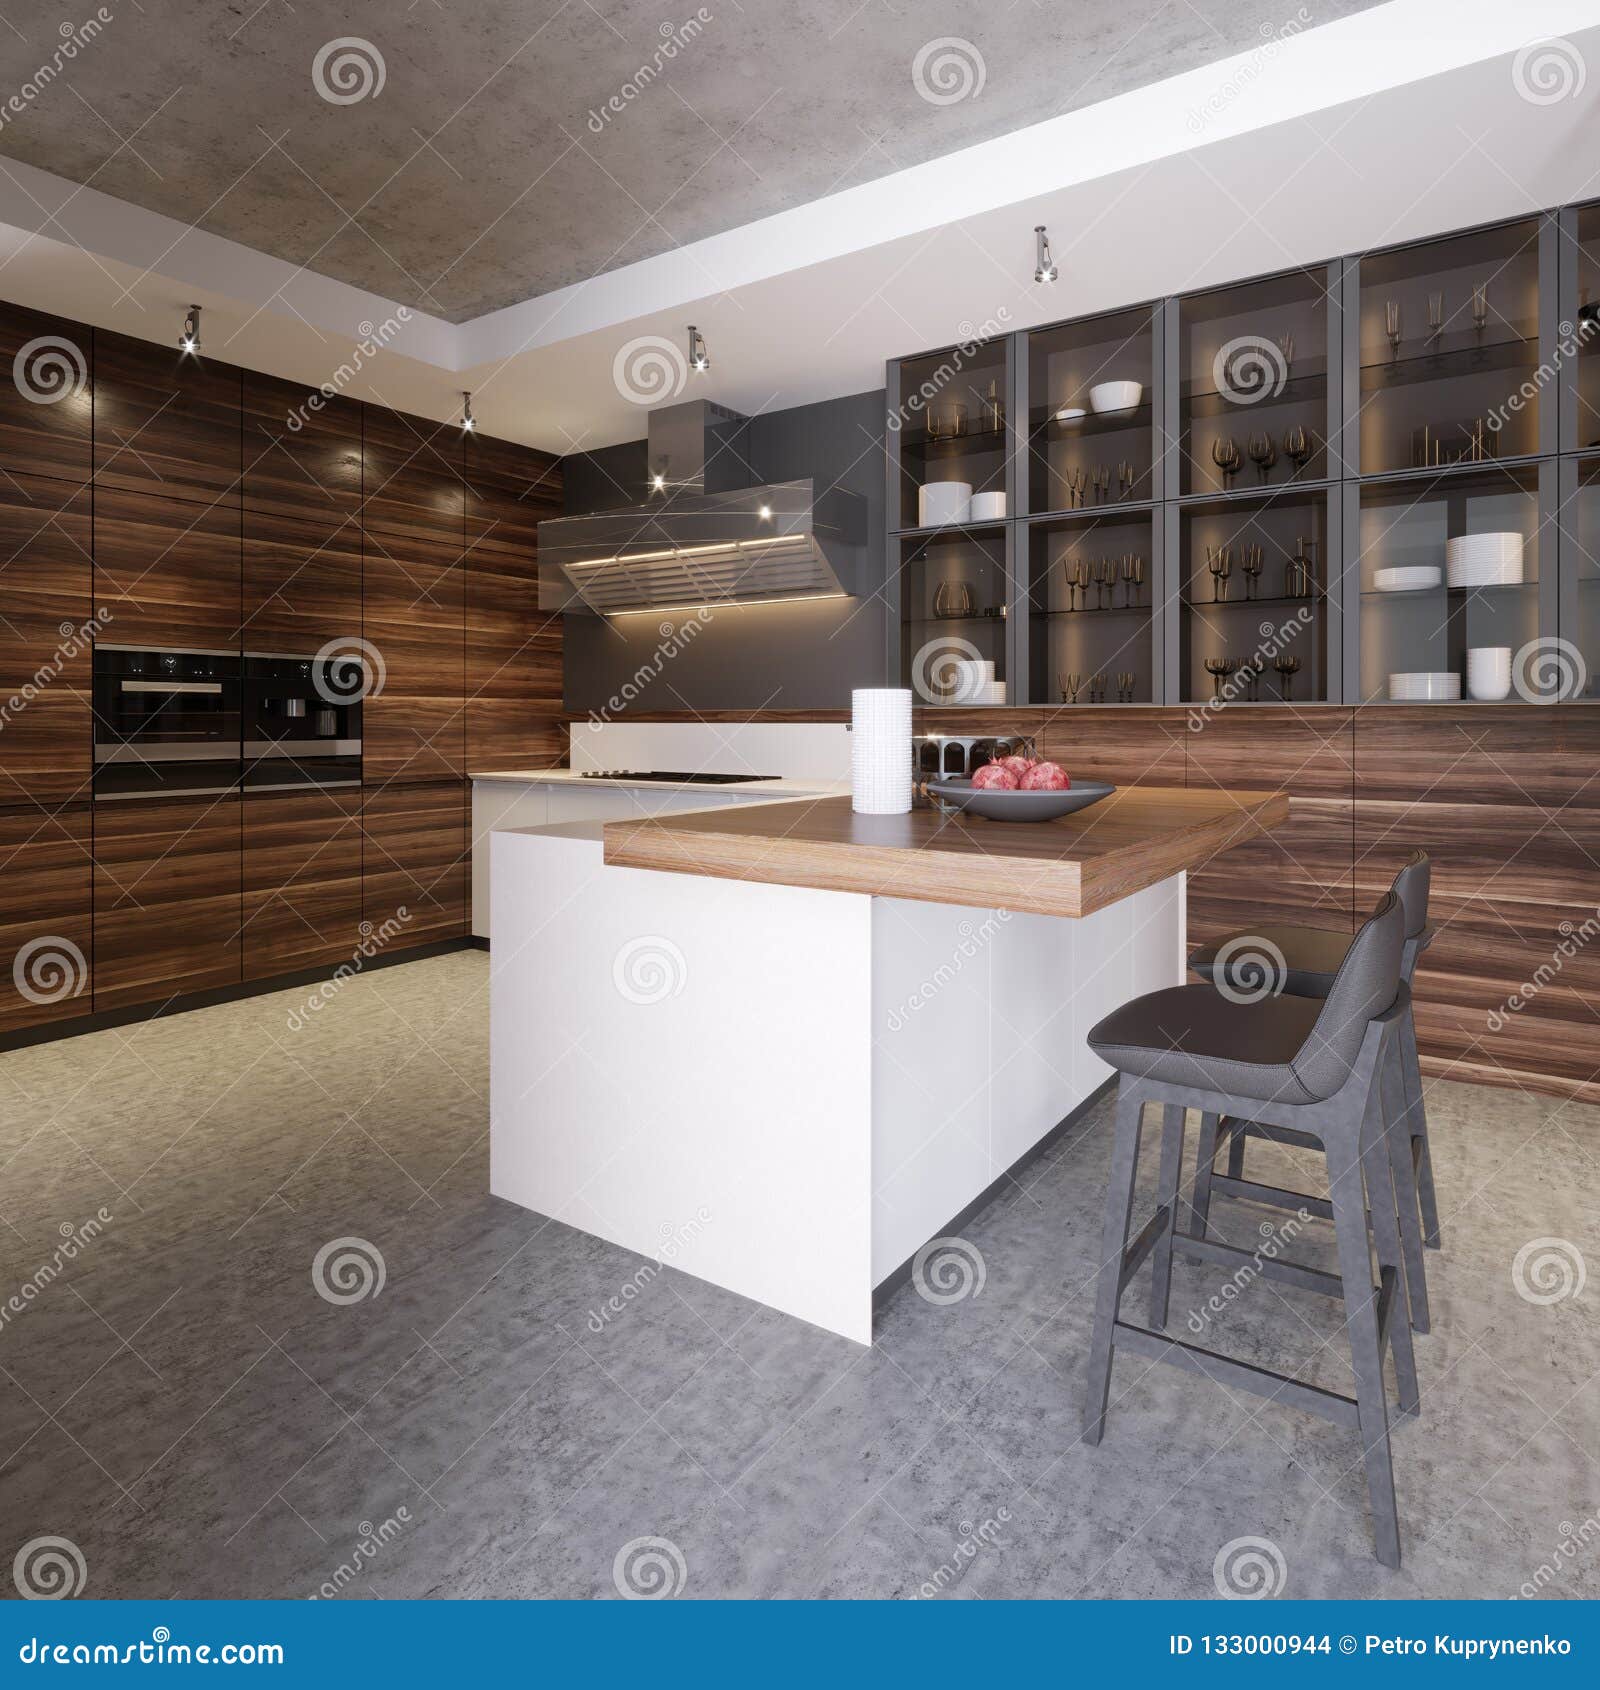 Kitchen Interior With Concrete Walls White Countertops And